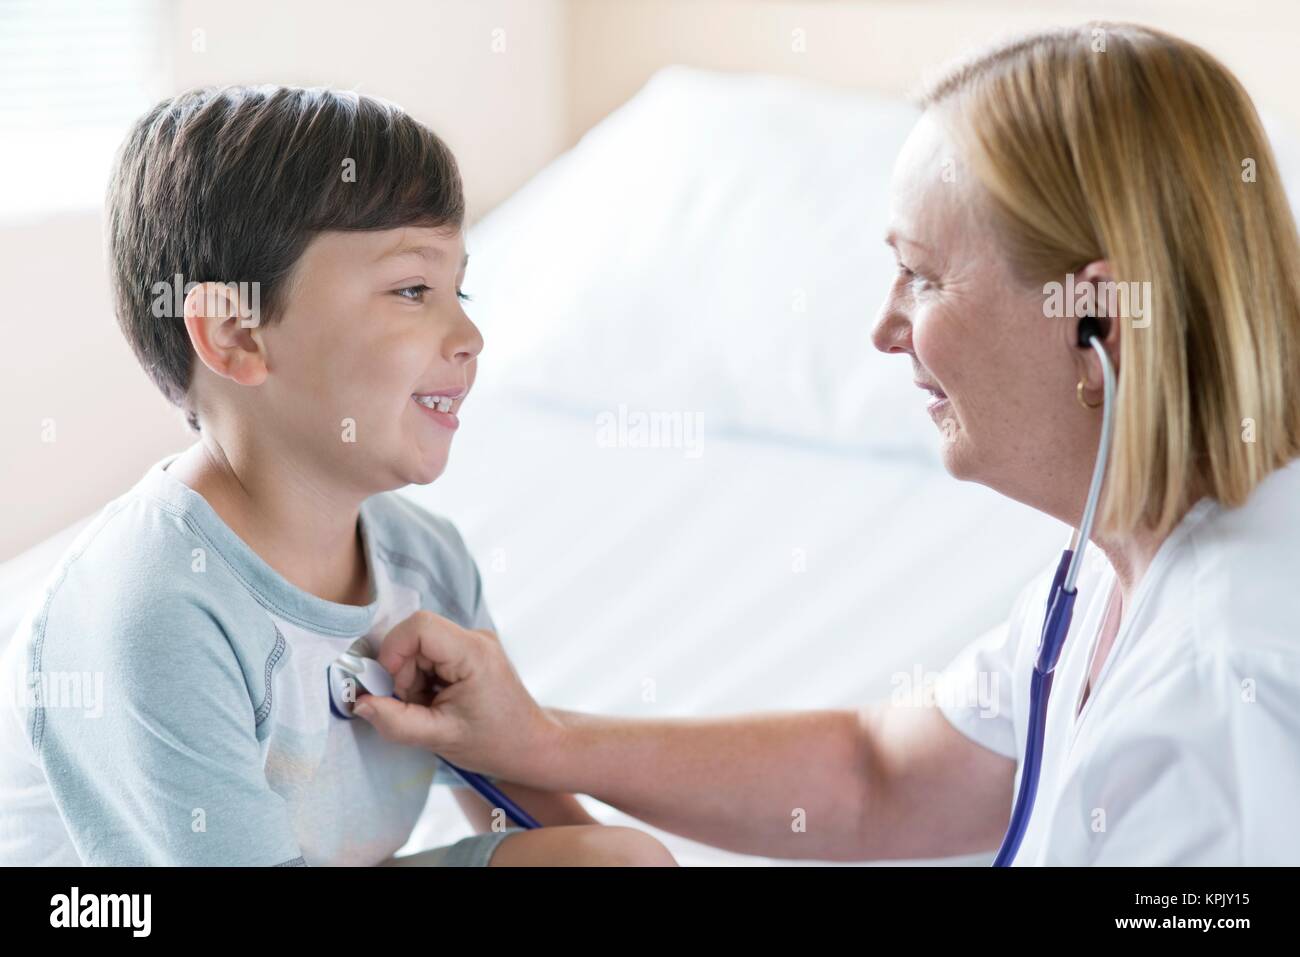 Young boy smiling towards nurse with stethoscope. Stock Photo